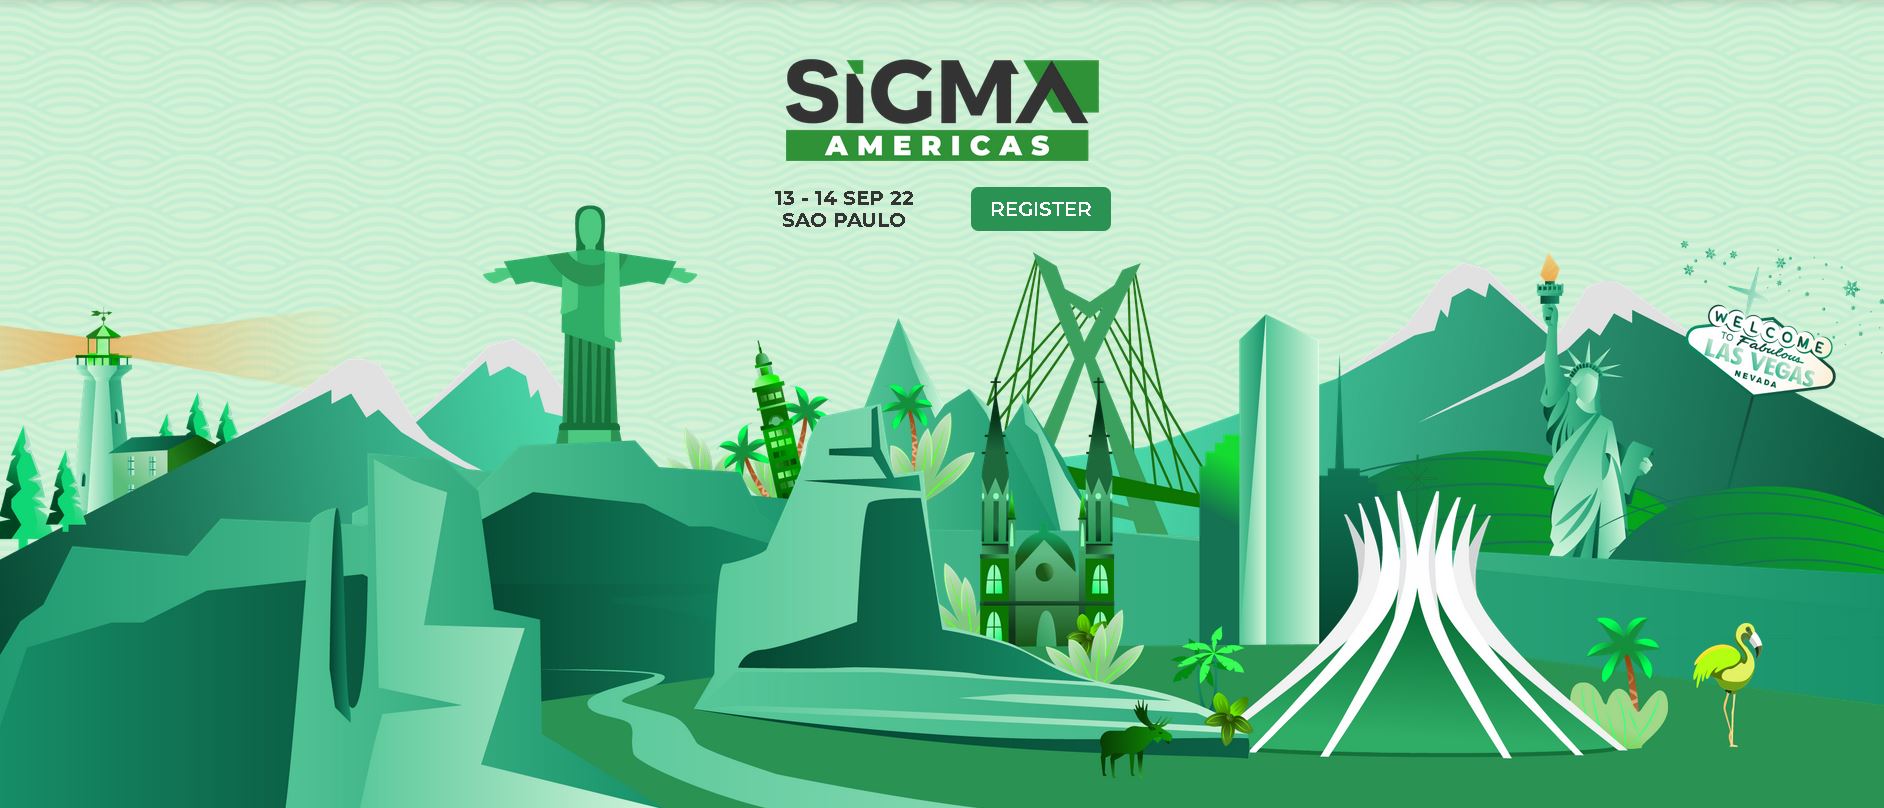 SIGMA AMERICAS organized by SiGMA Group